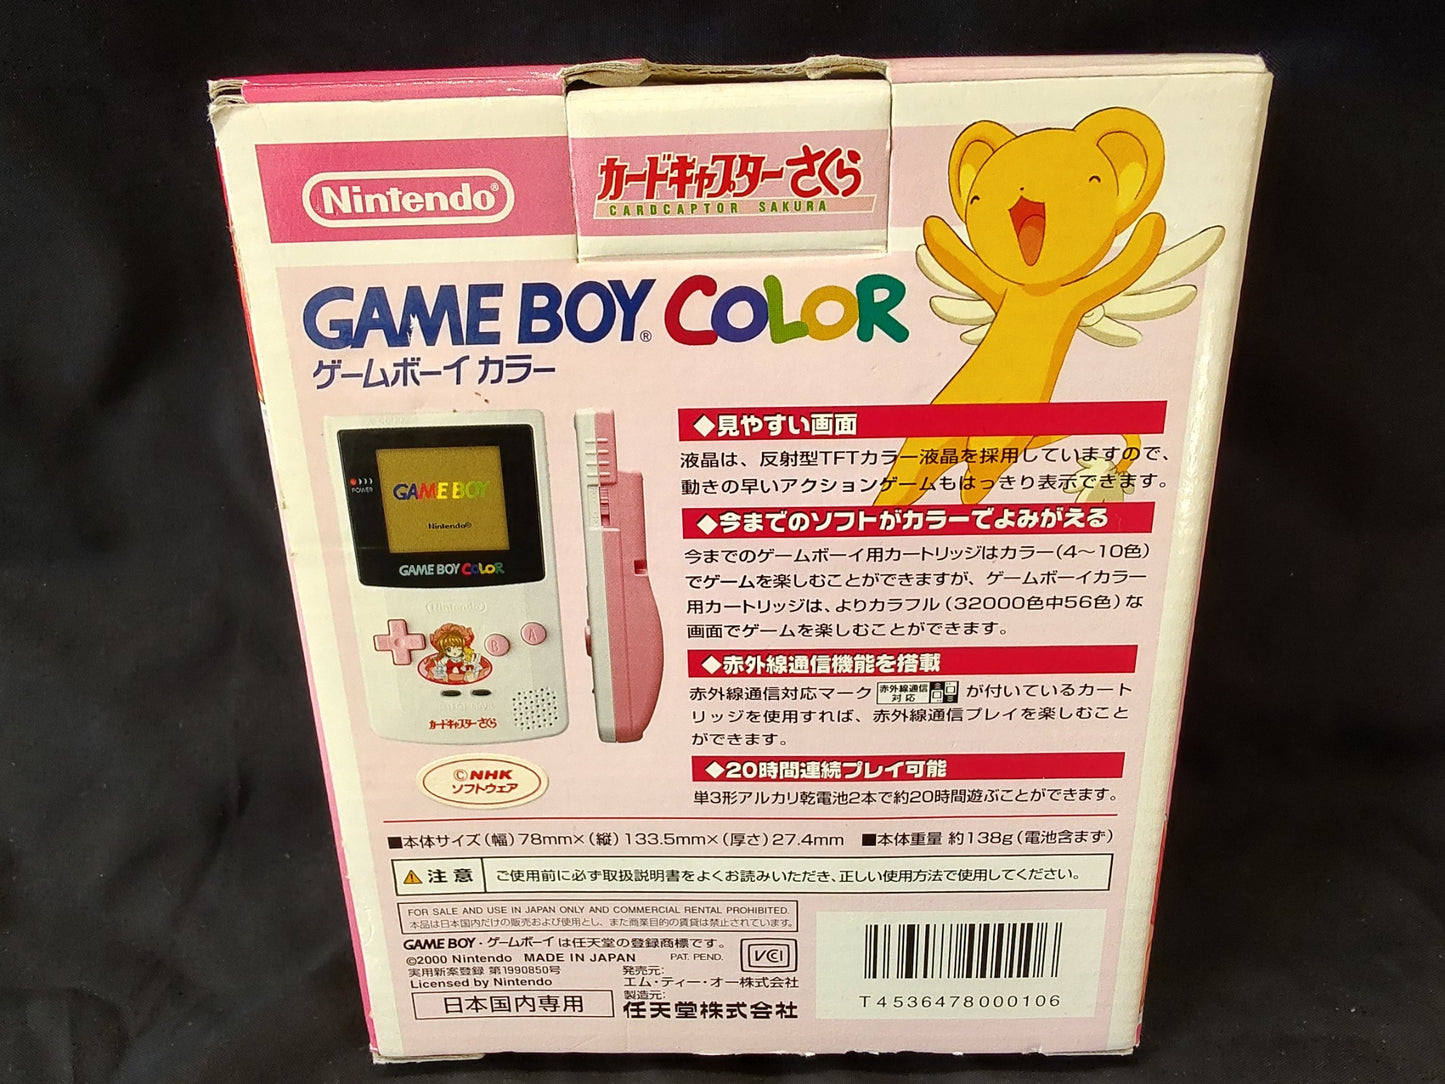 Nintendo Gameboy Color CARD CAPTOR SAKURA Limited edition console Boxed -g0117-